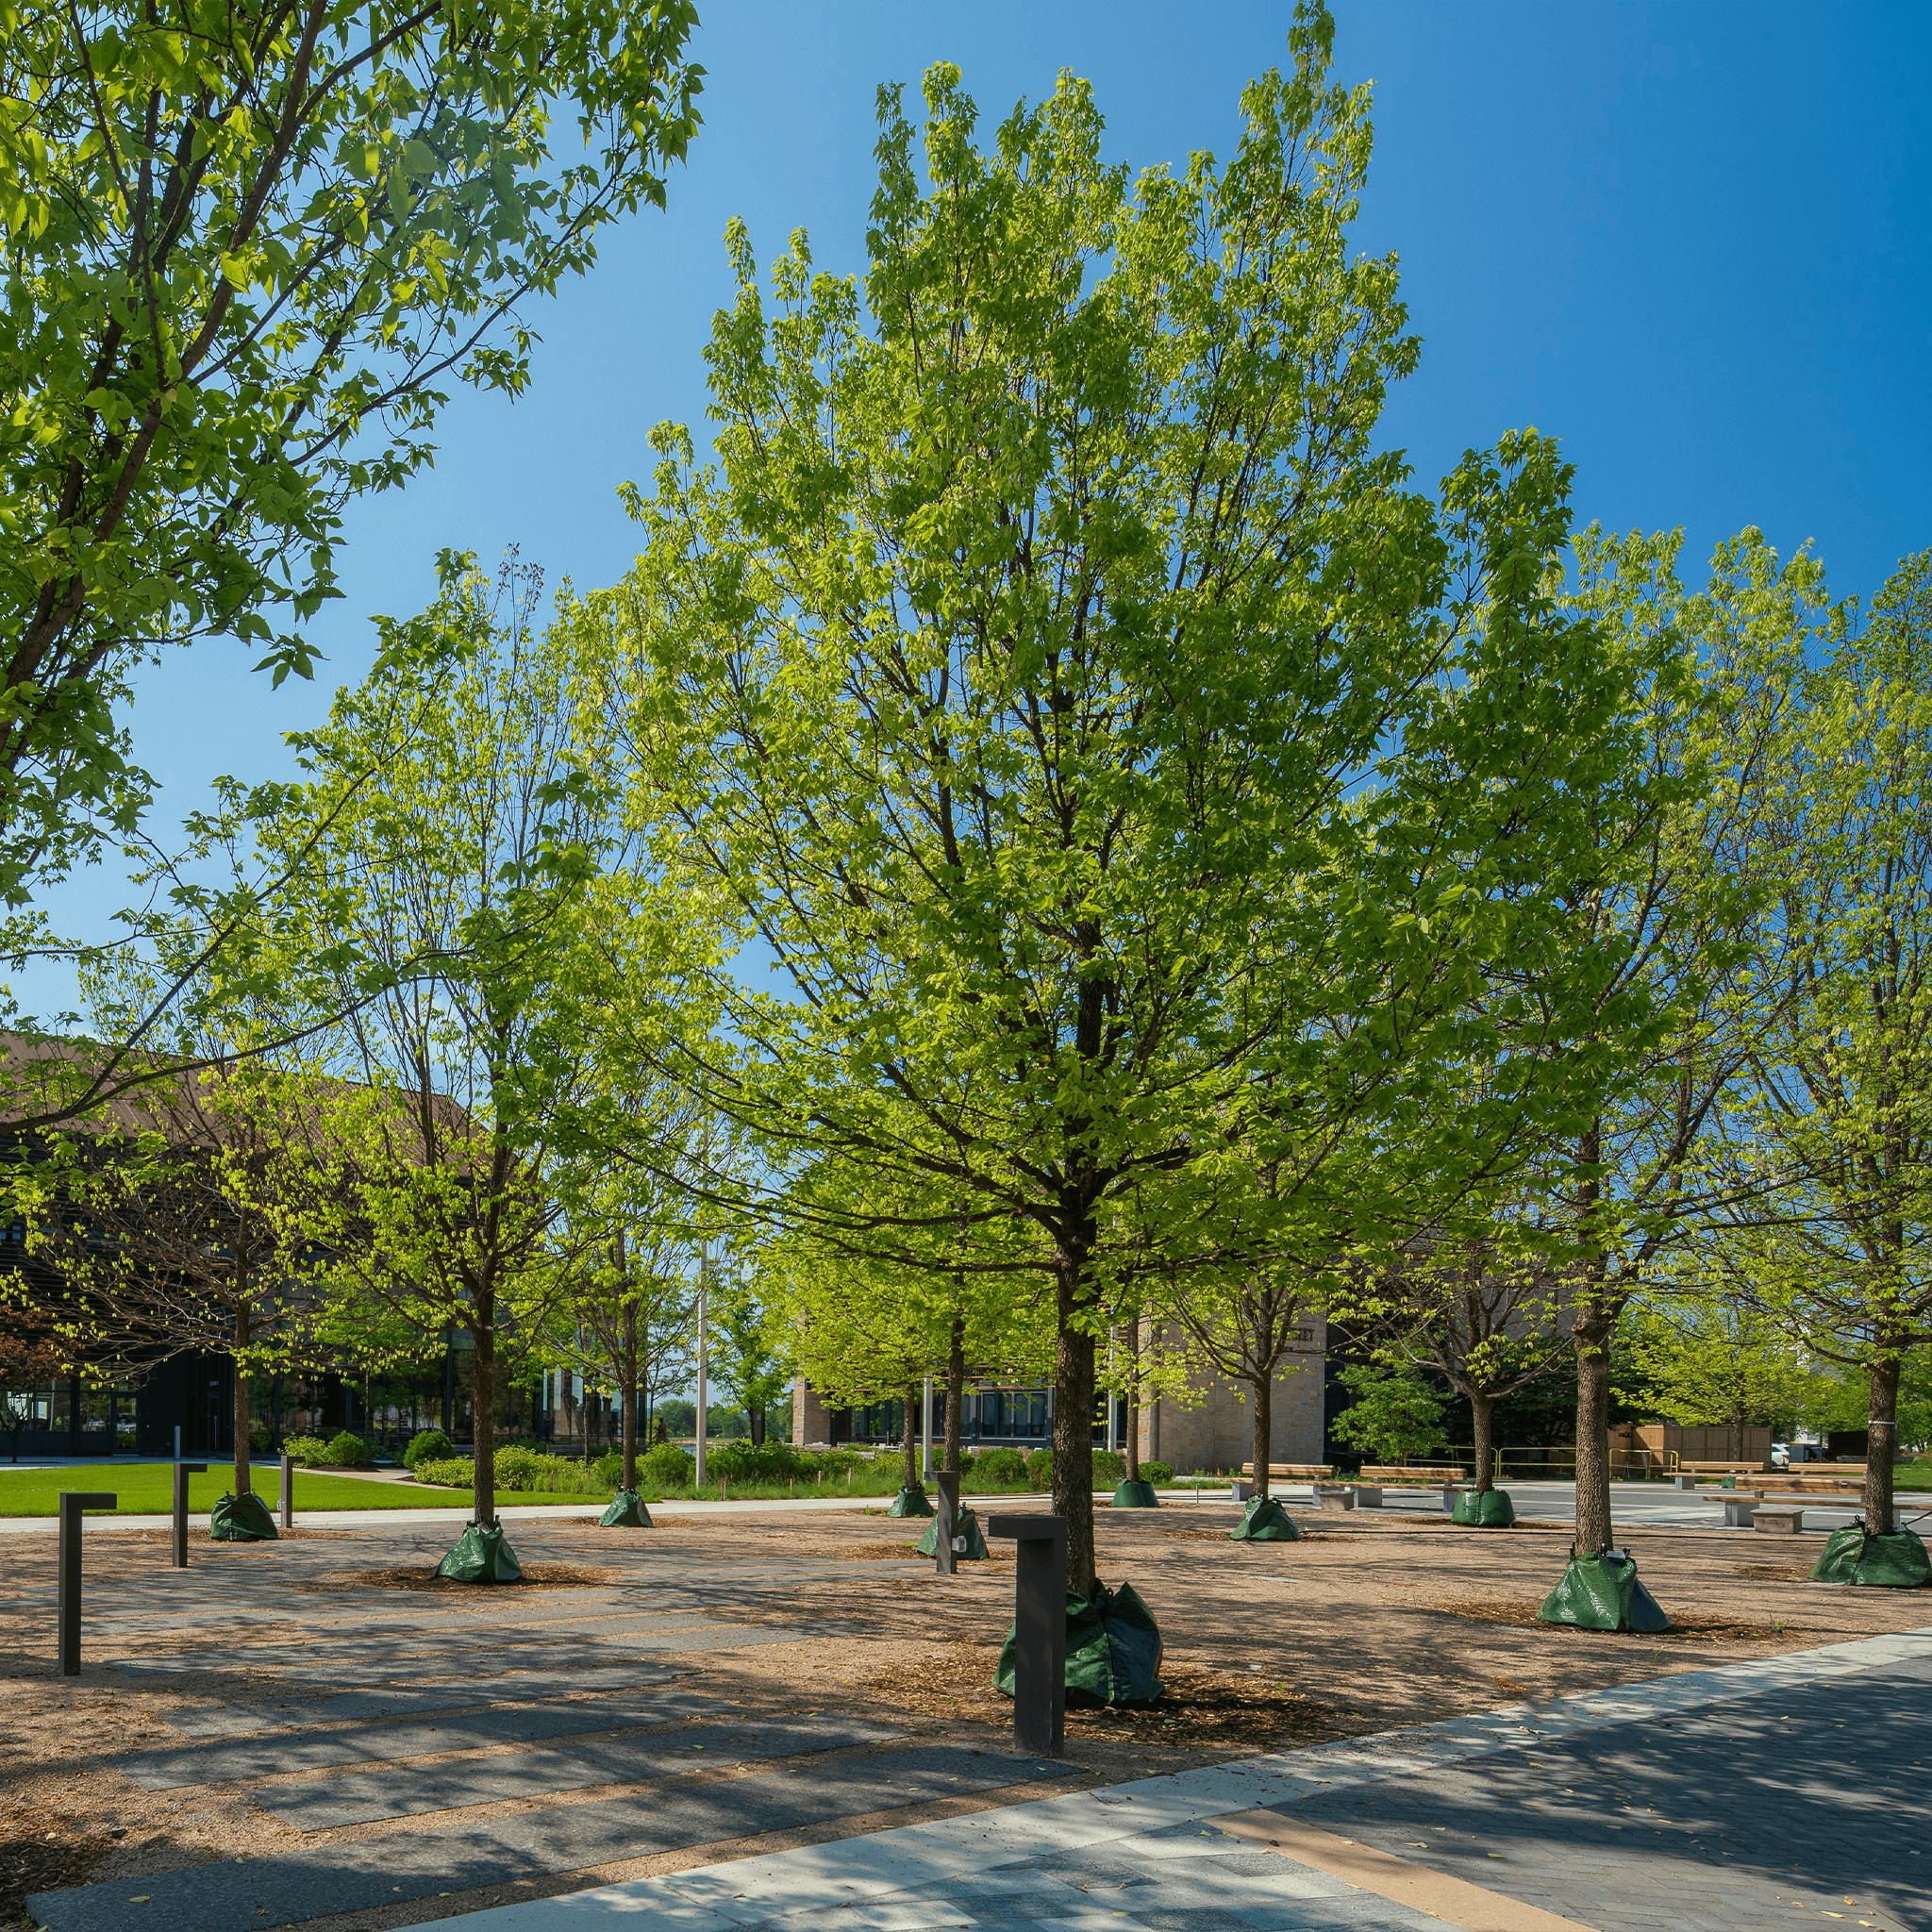 Rye Street Park